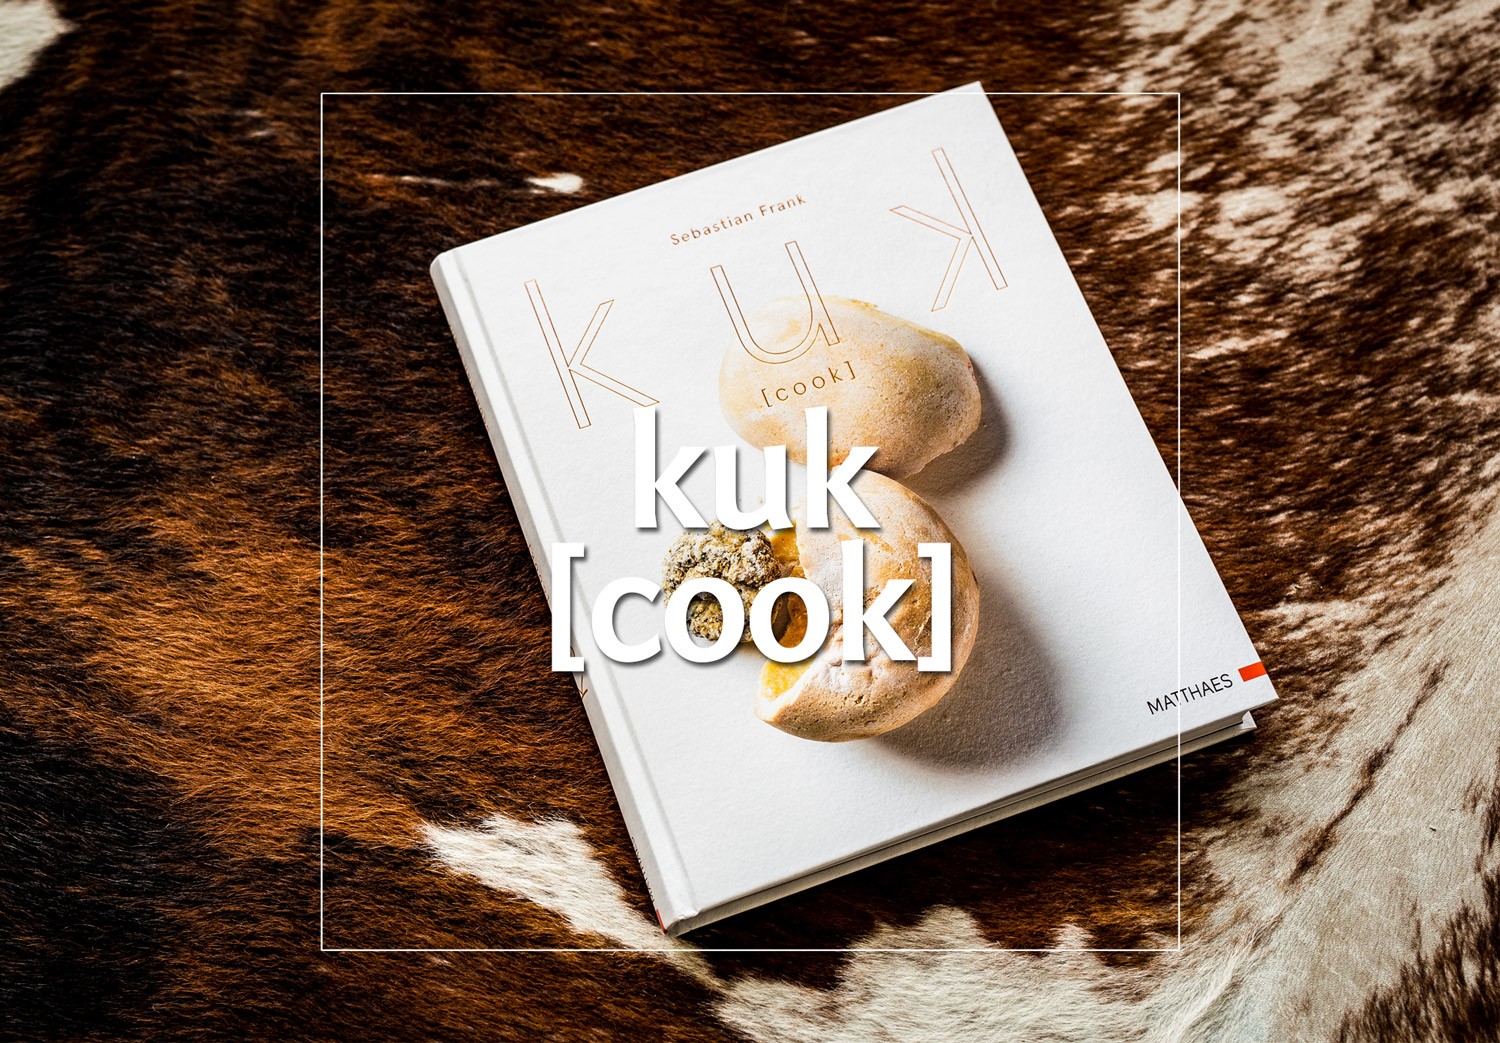 KUK – [cook] von Sebastian Frank